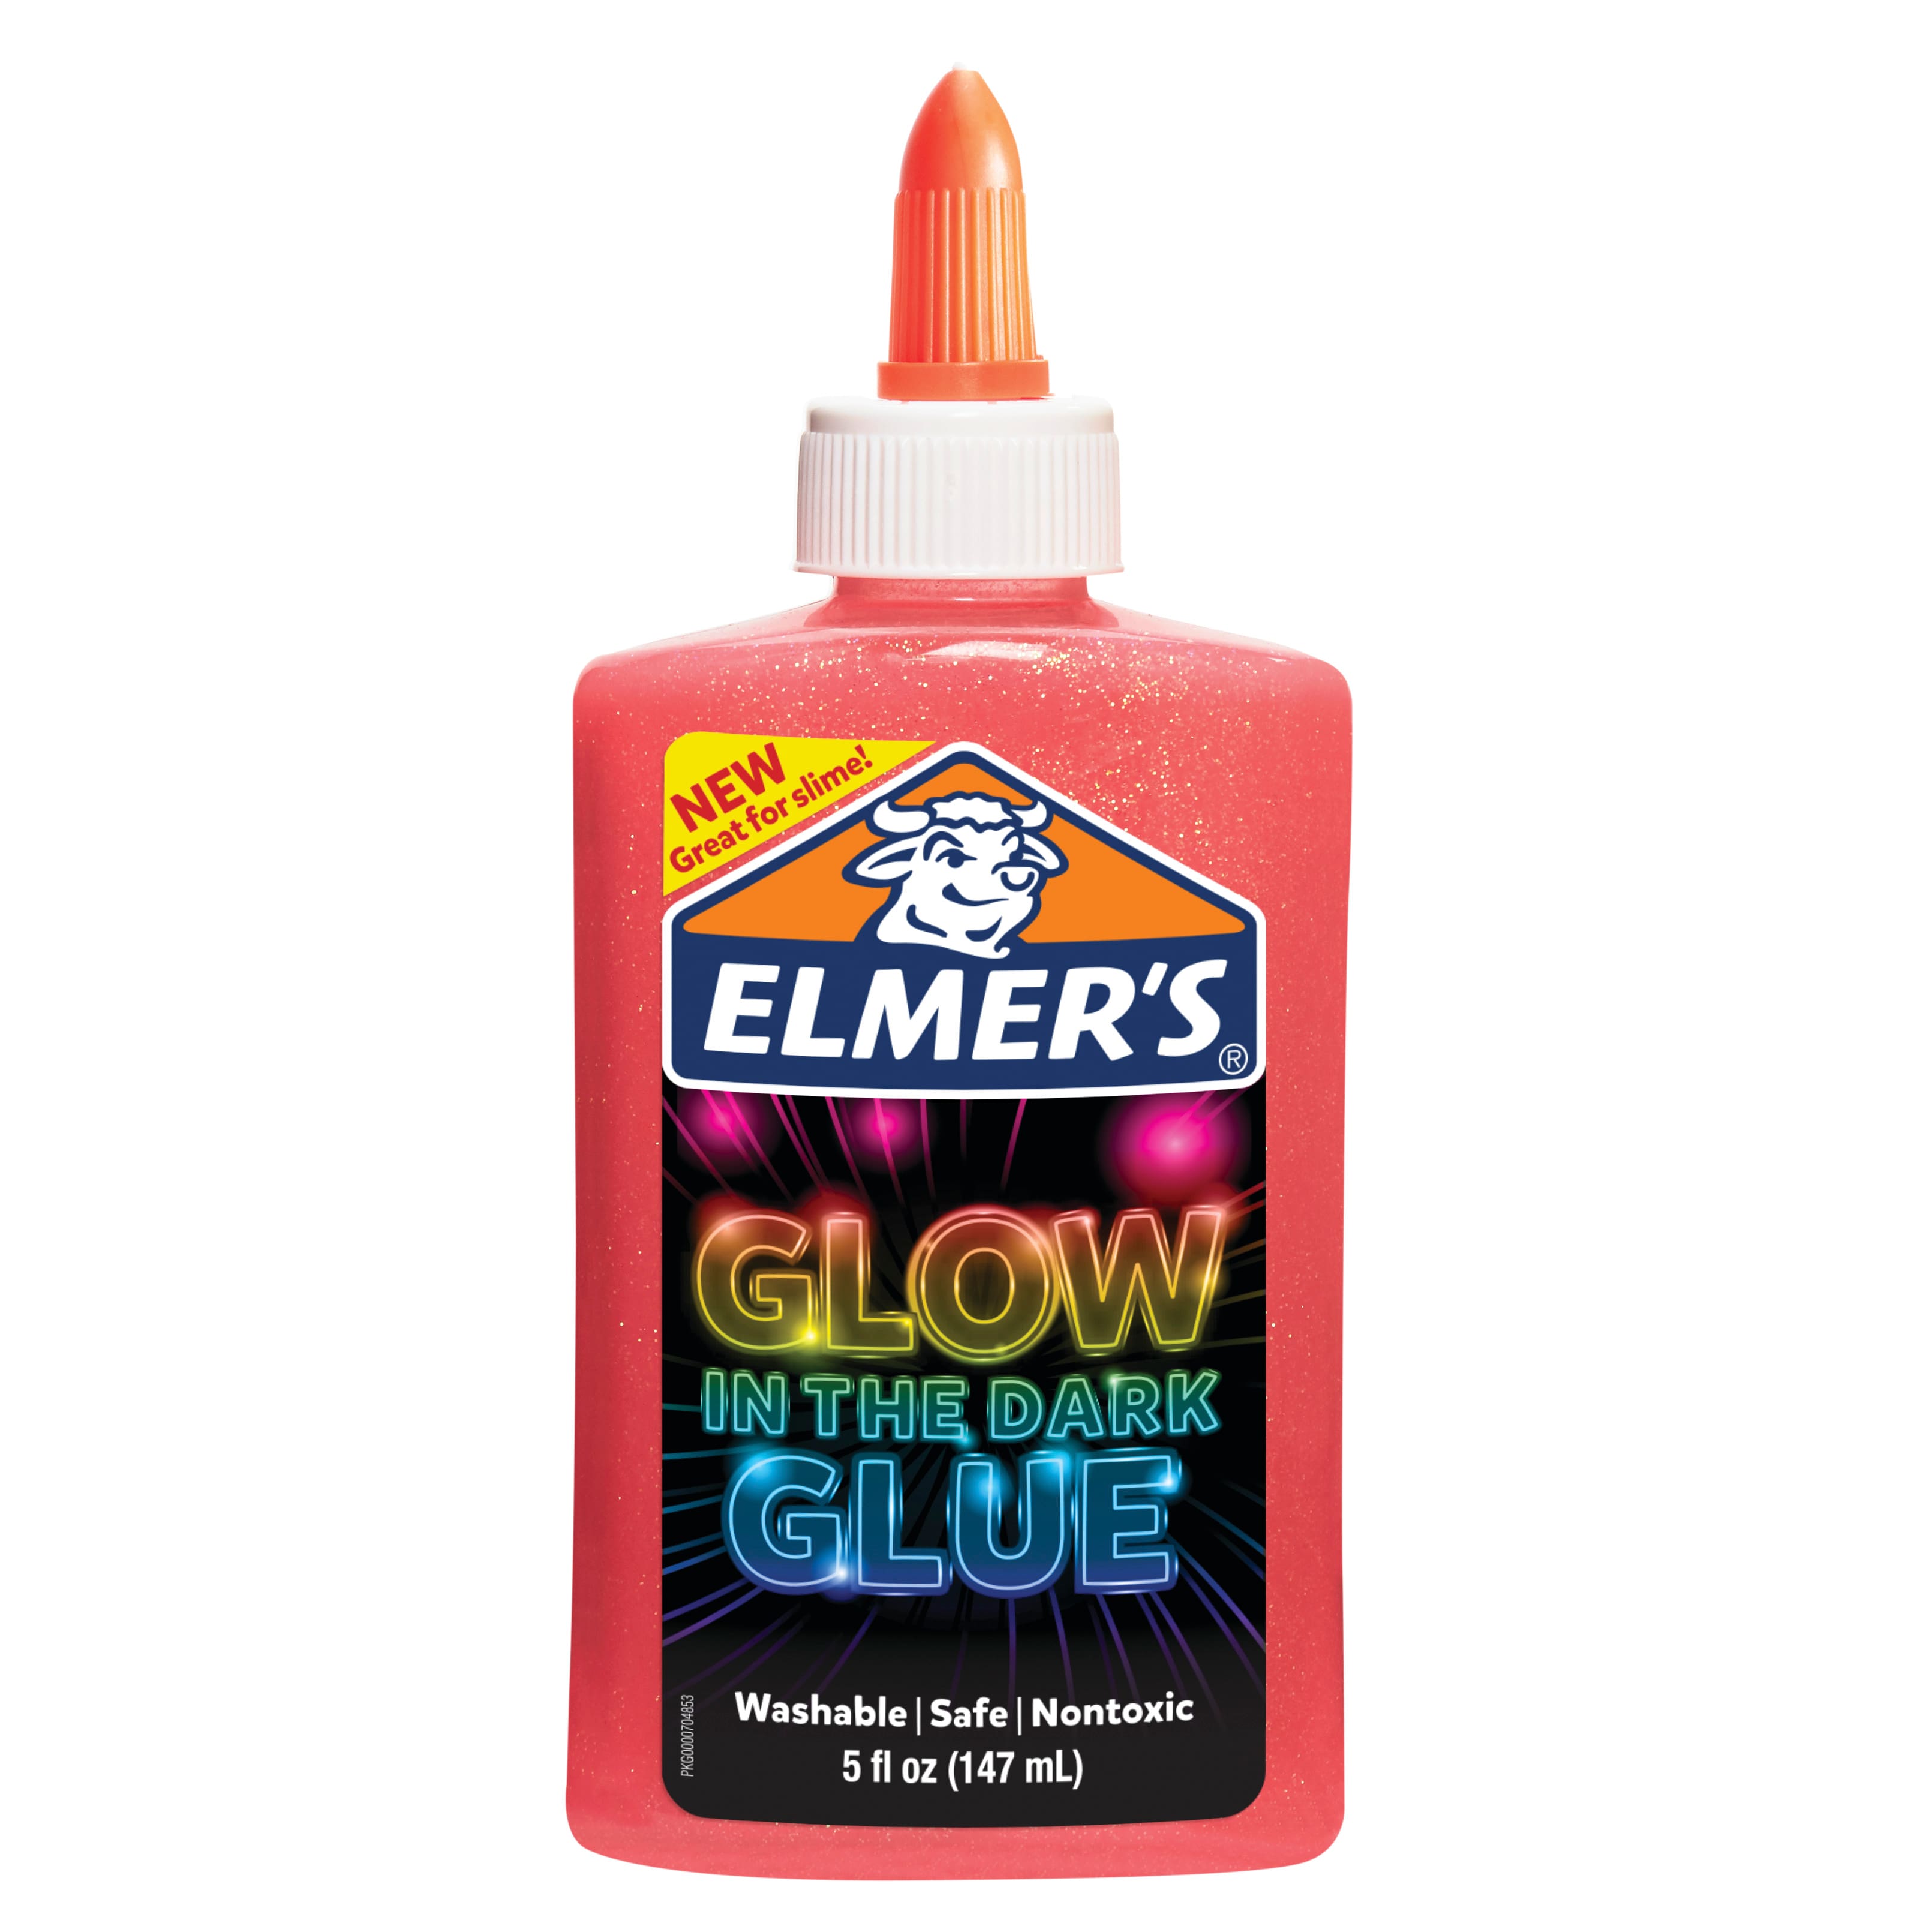 Elmer's Clear PVA Glue, Washable & Child Friendly, 147 mL– Great for Making Slime